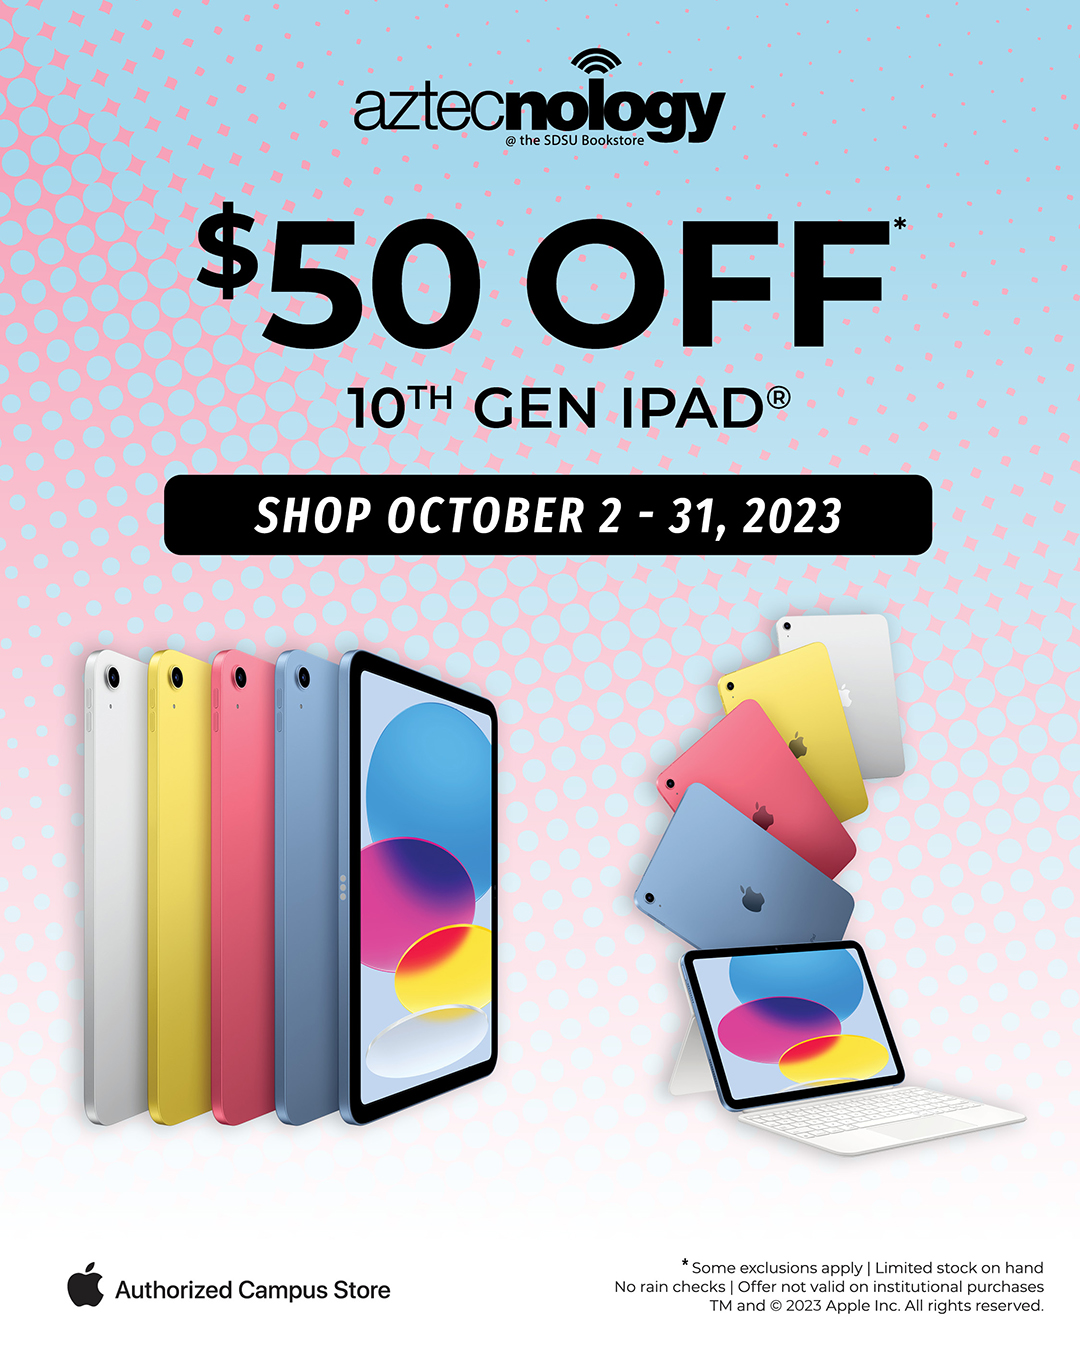 $50 off the 10th generation iPad. Shop October 2 - 31, 2023